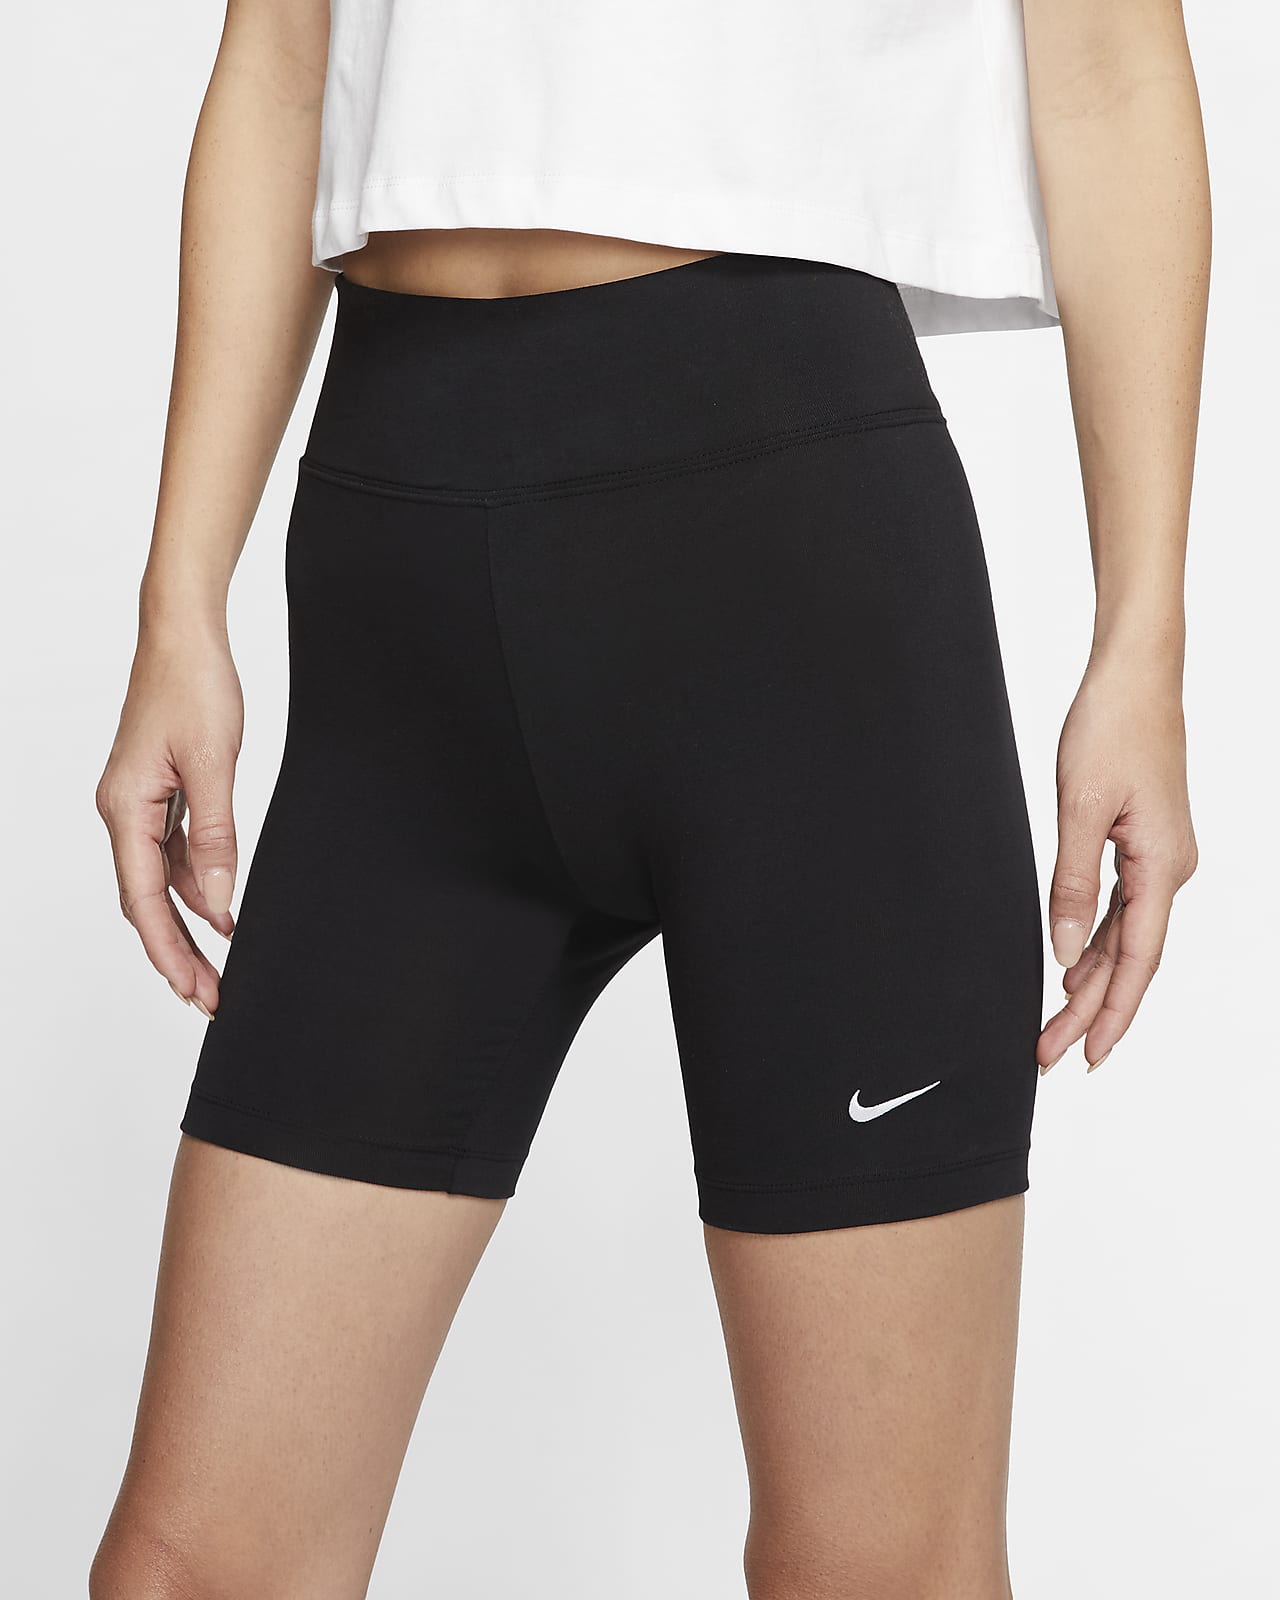 Shorts de ciclismo para mujer Nike Sportswear Leg-A-See. Nike MX